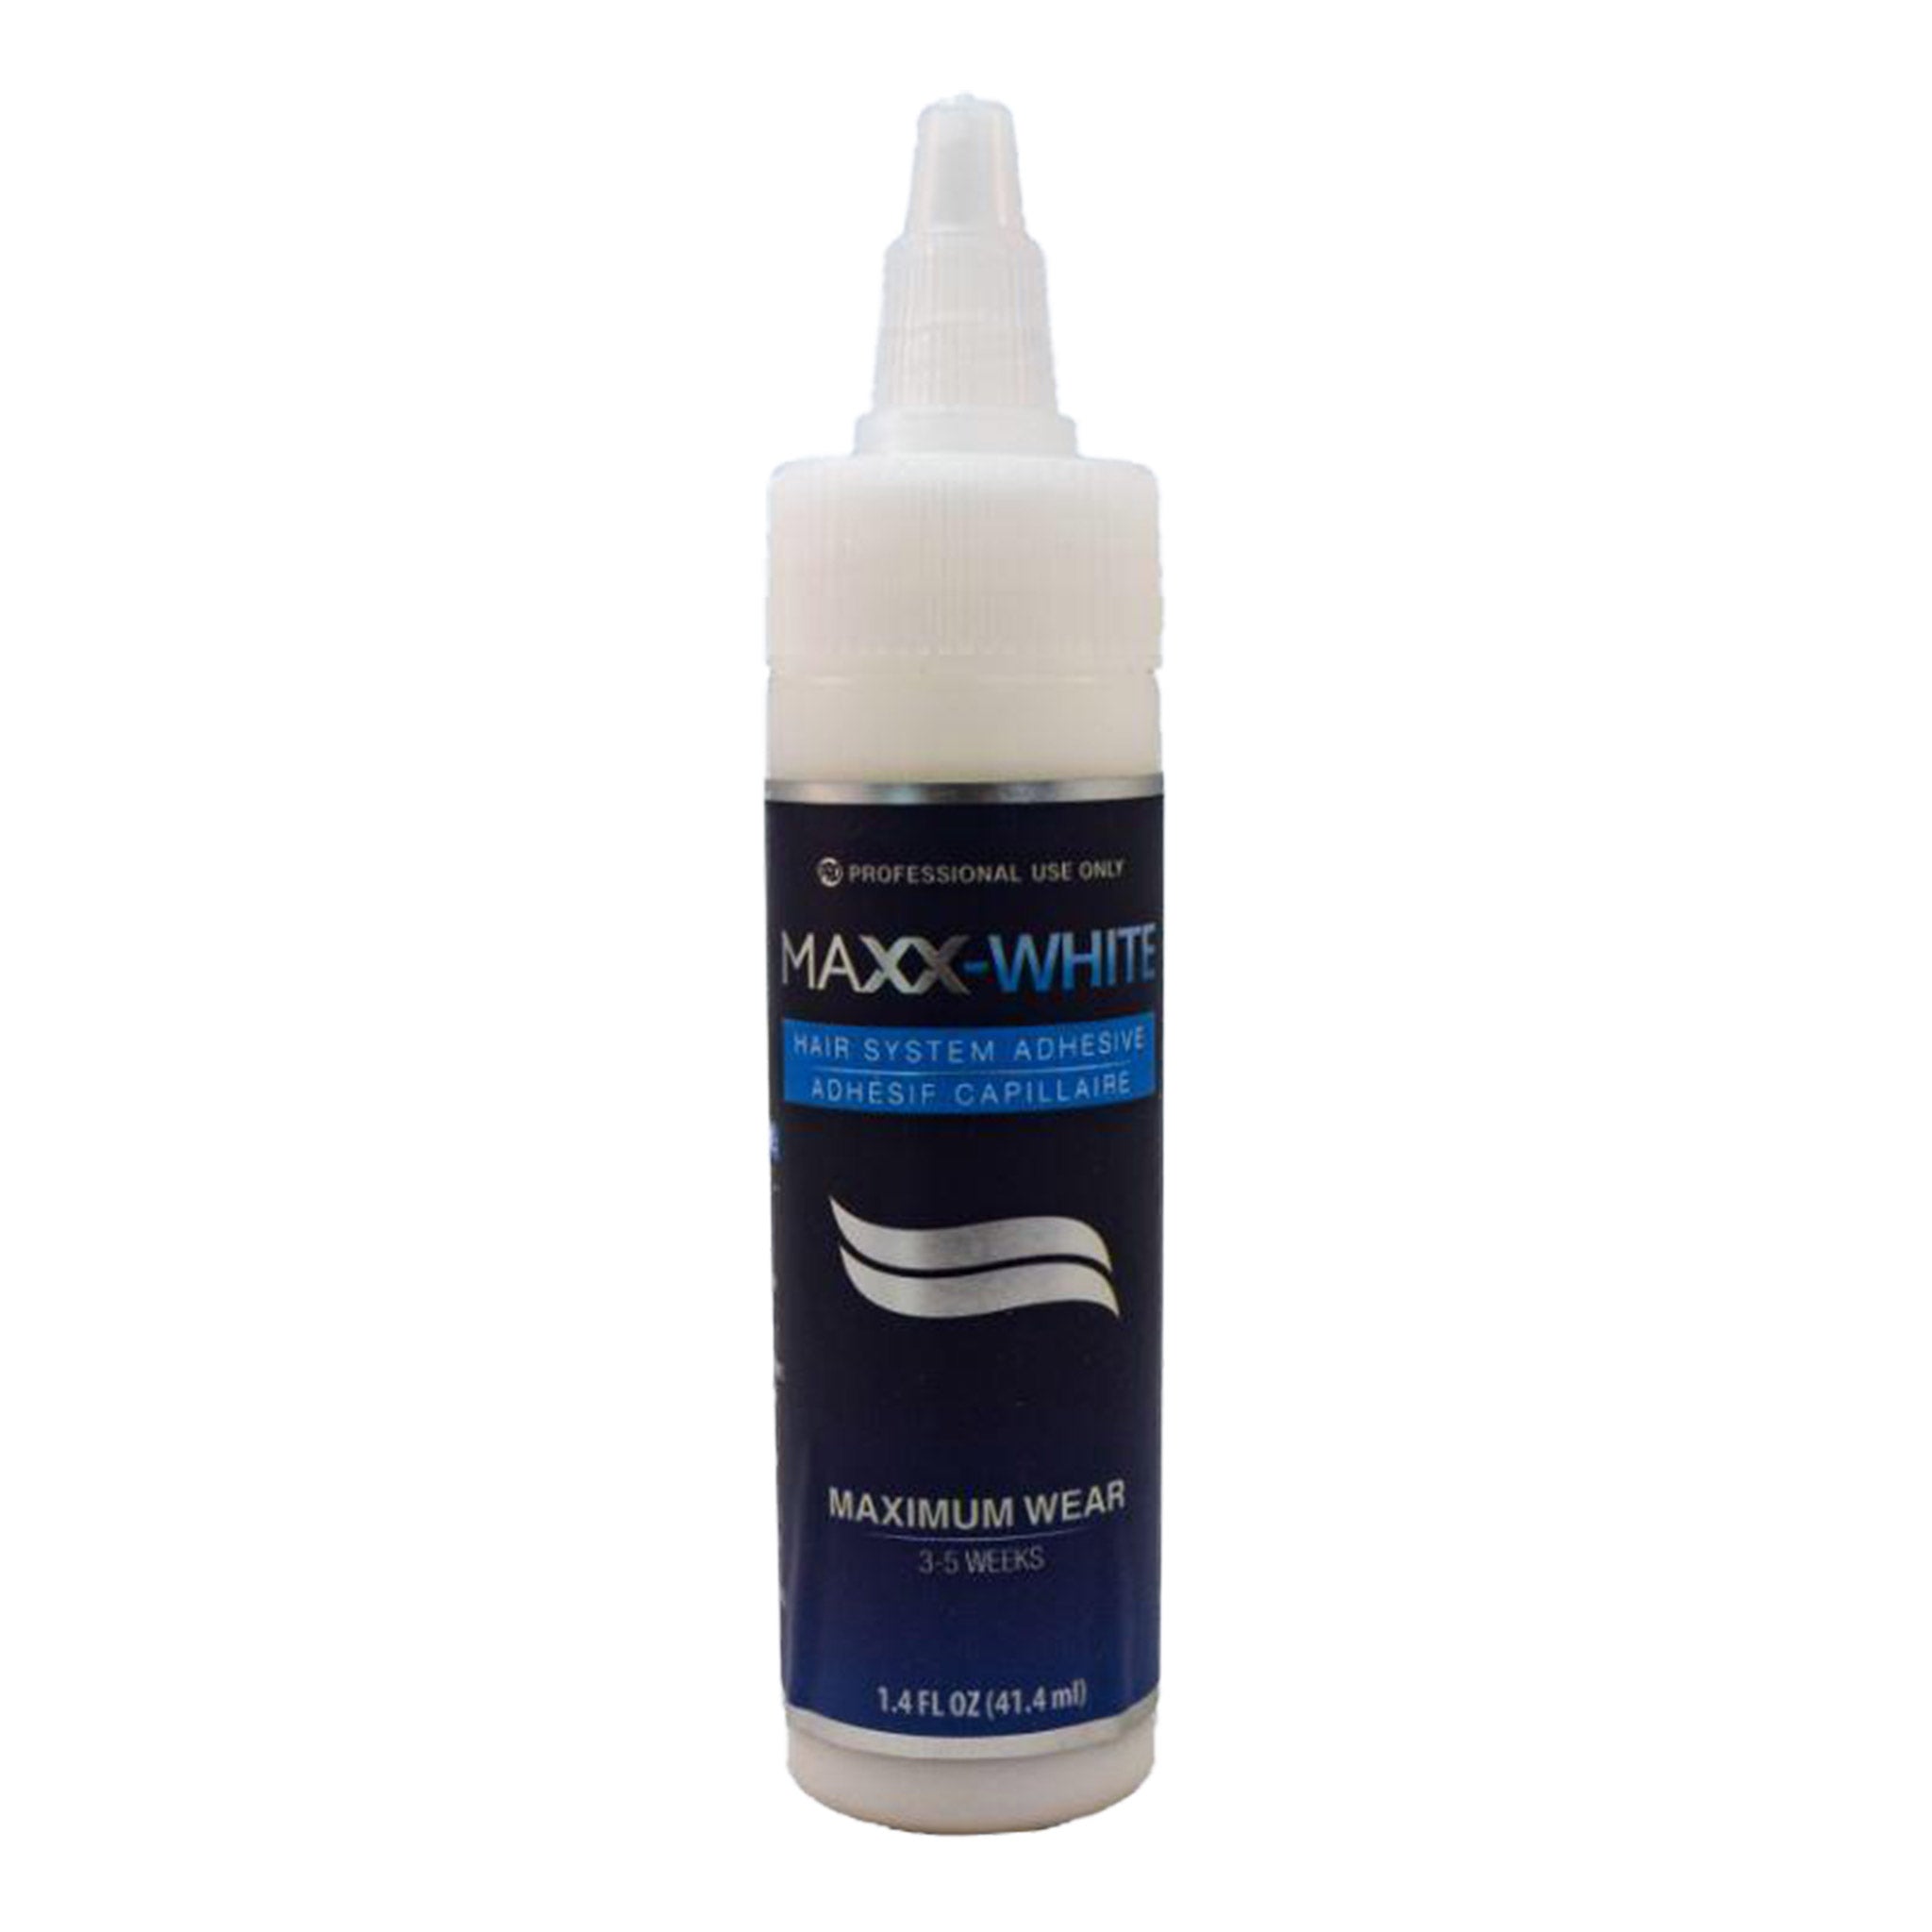 Maxx-White Hair System Adhesive